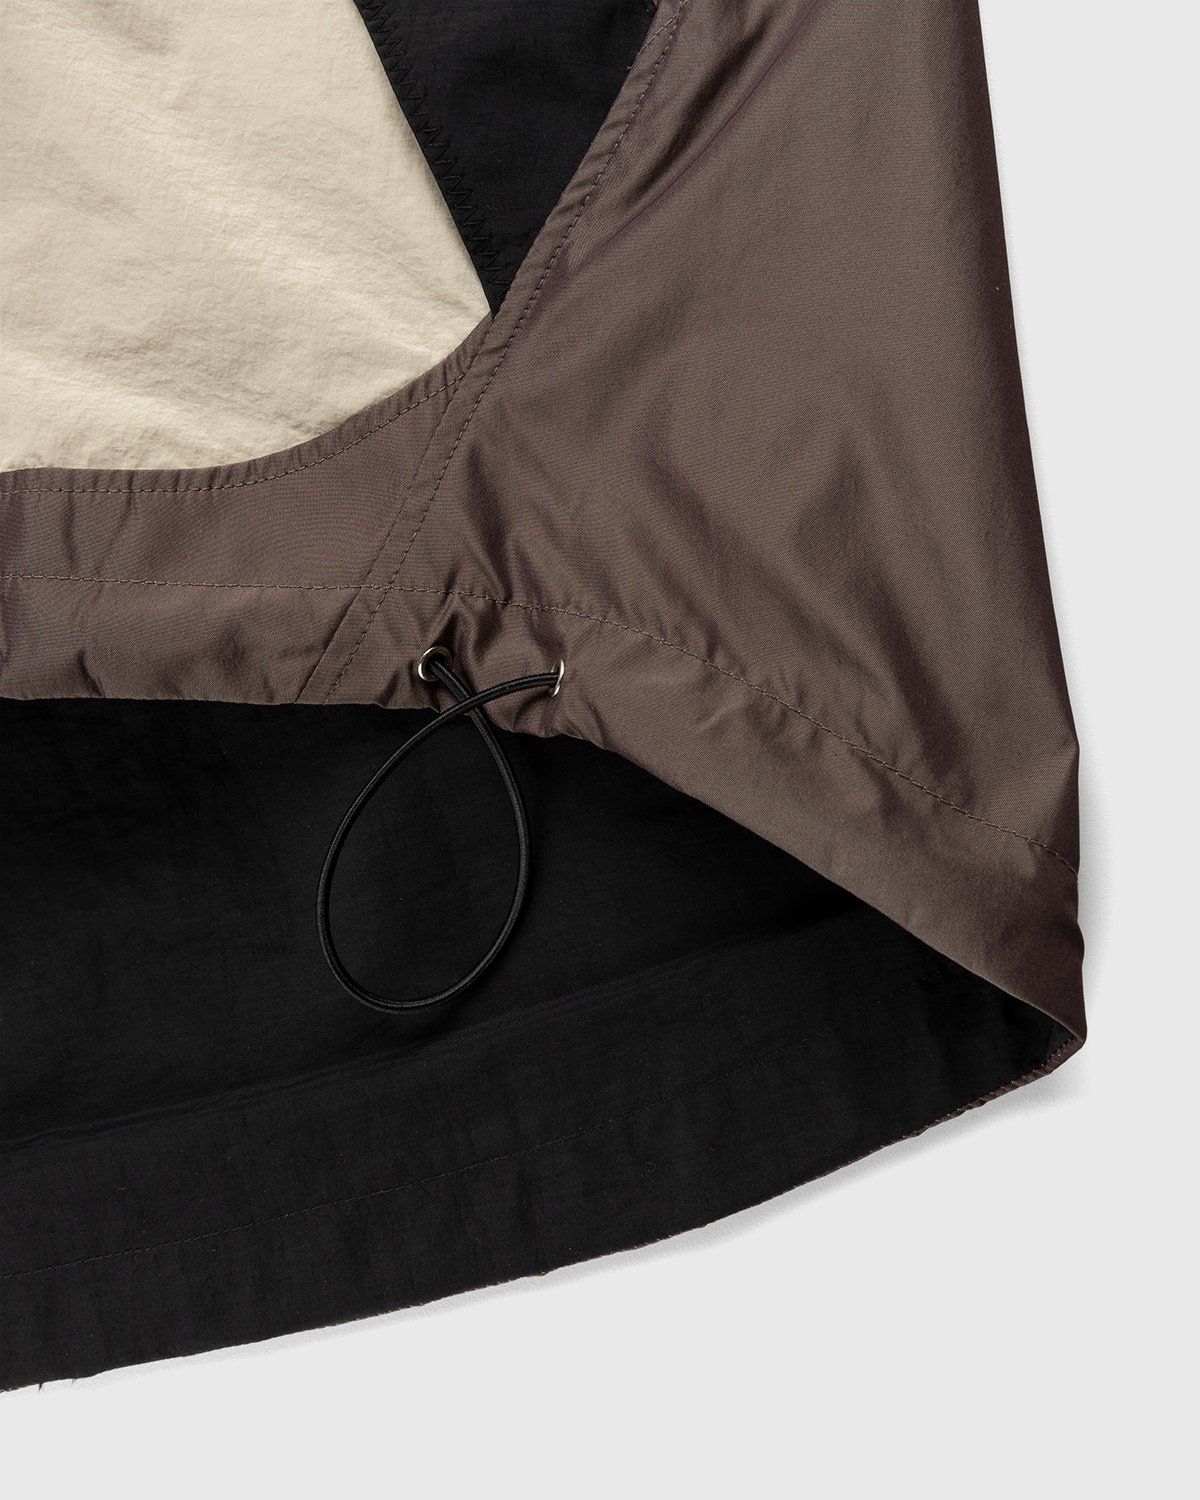 Arnar Mar Jonsson – Texlon Composition Outerwear Jacket Beige Chocolate Black - Outerwear - Black - Image 6